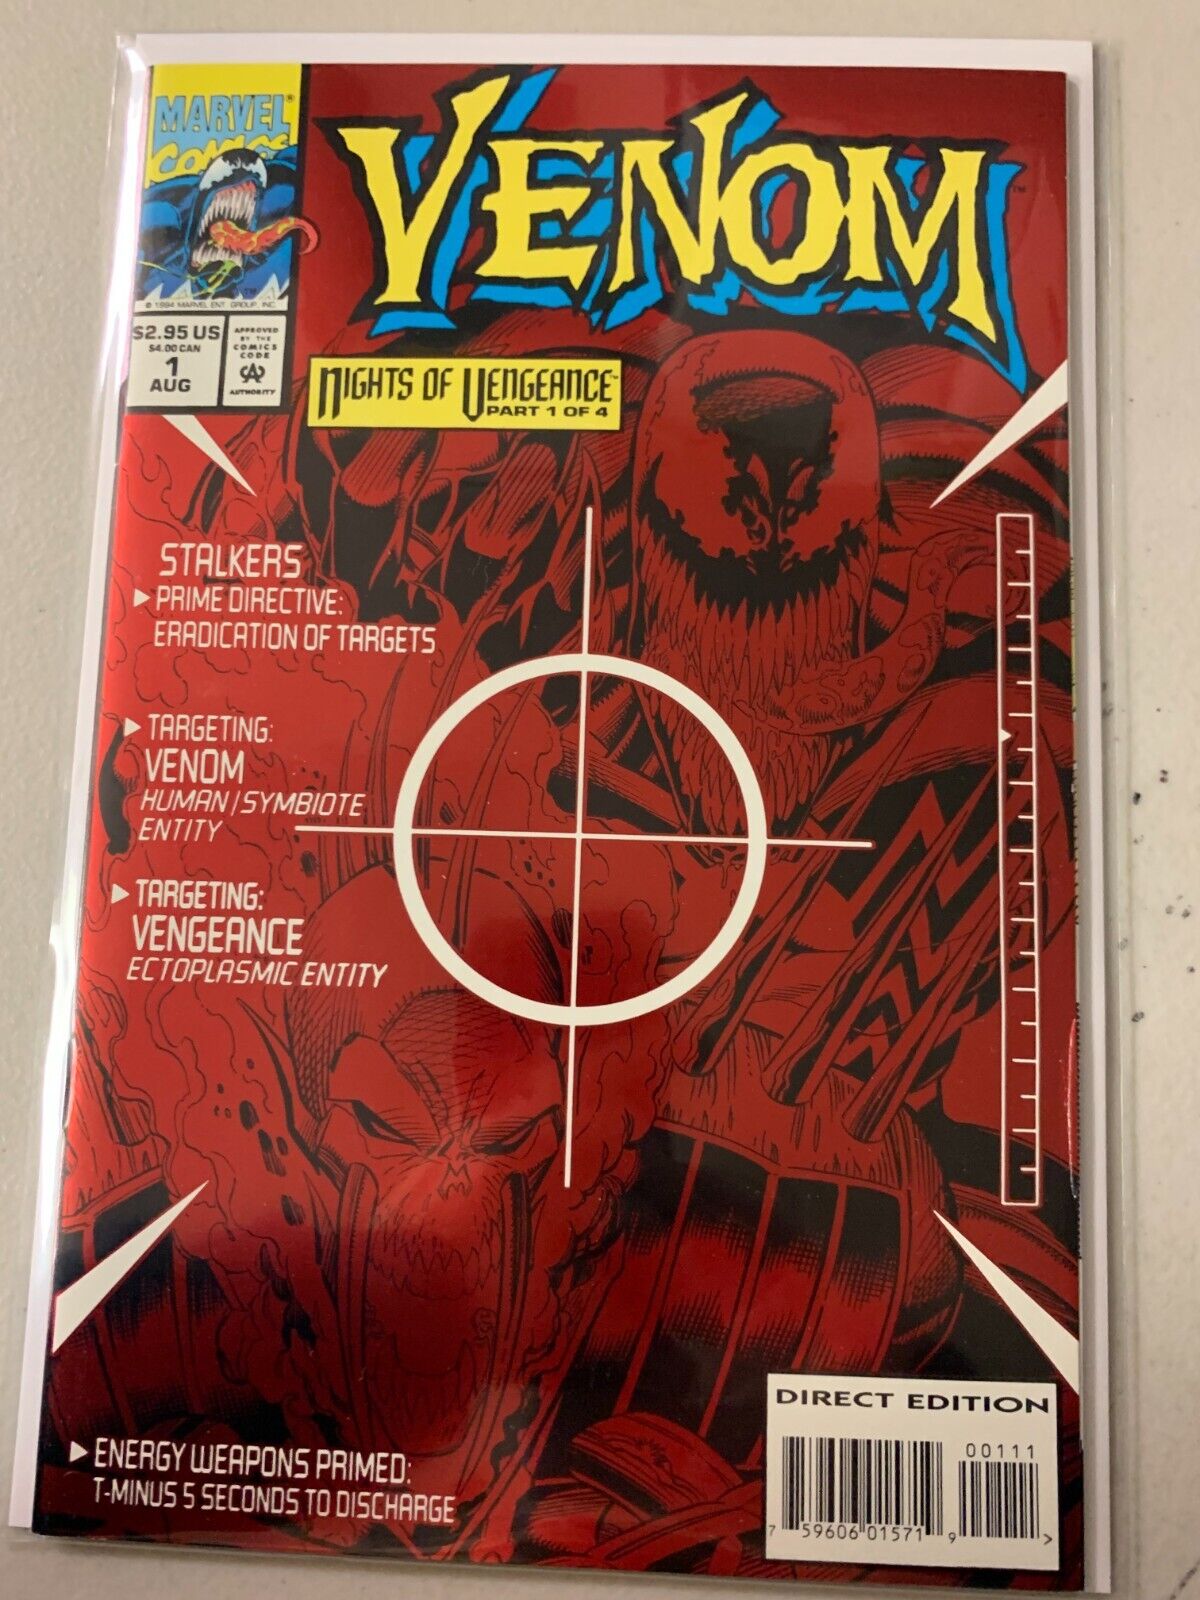 Venom Nights of Vengeance #1 direct 8.0 (1994)